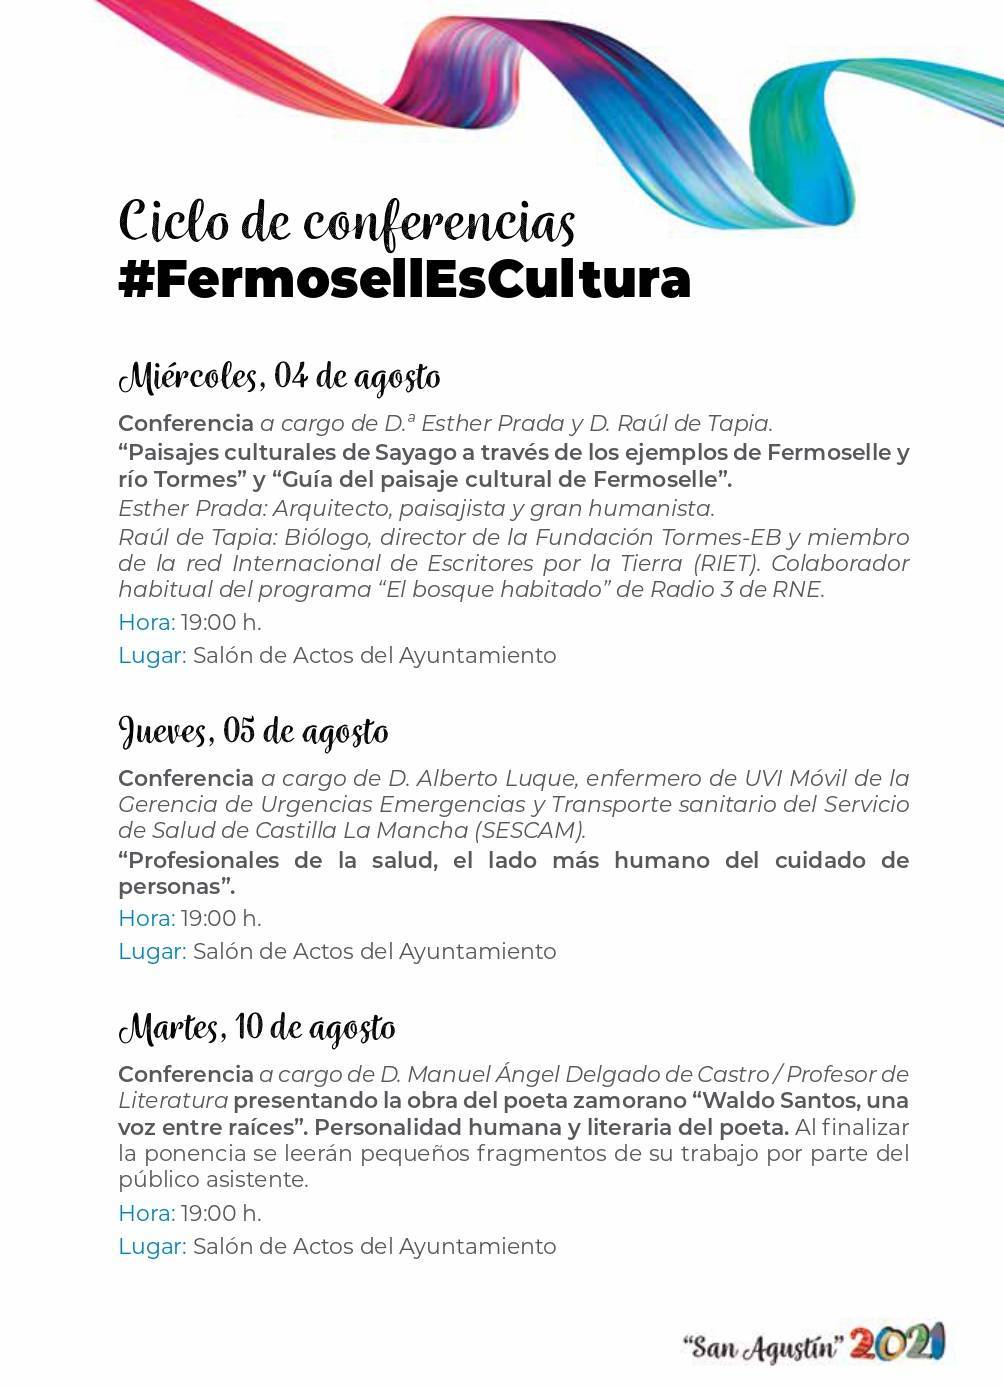 Programa de ferias y fiestas de San Agustín (2021) - Fermoselle (Zamora) 15